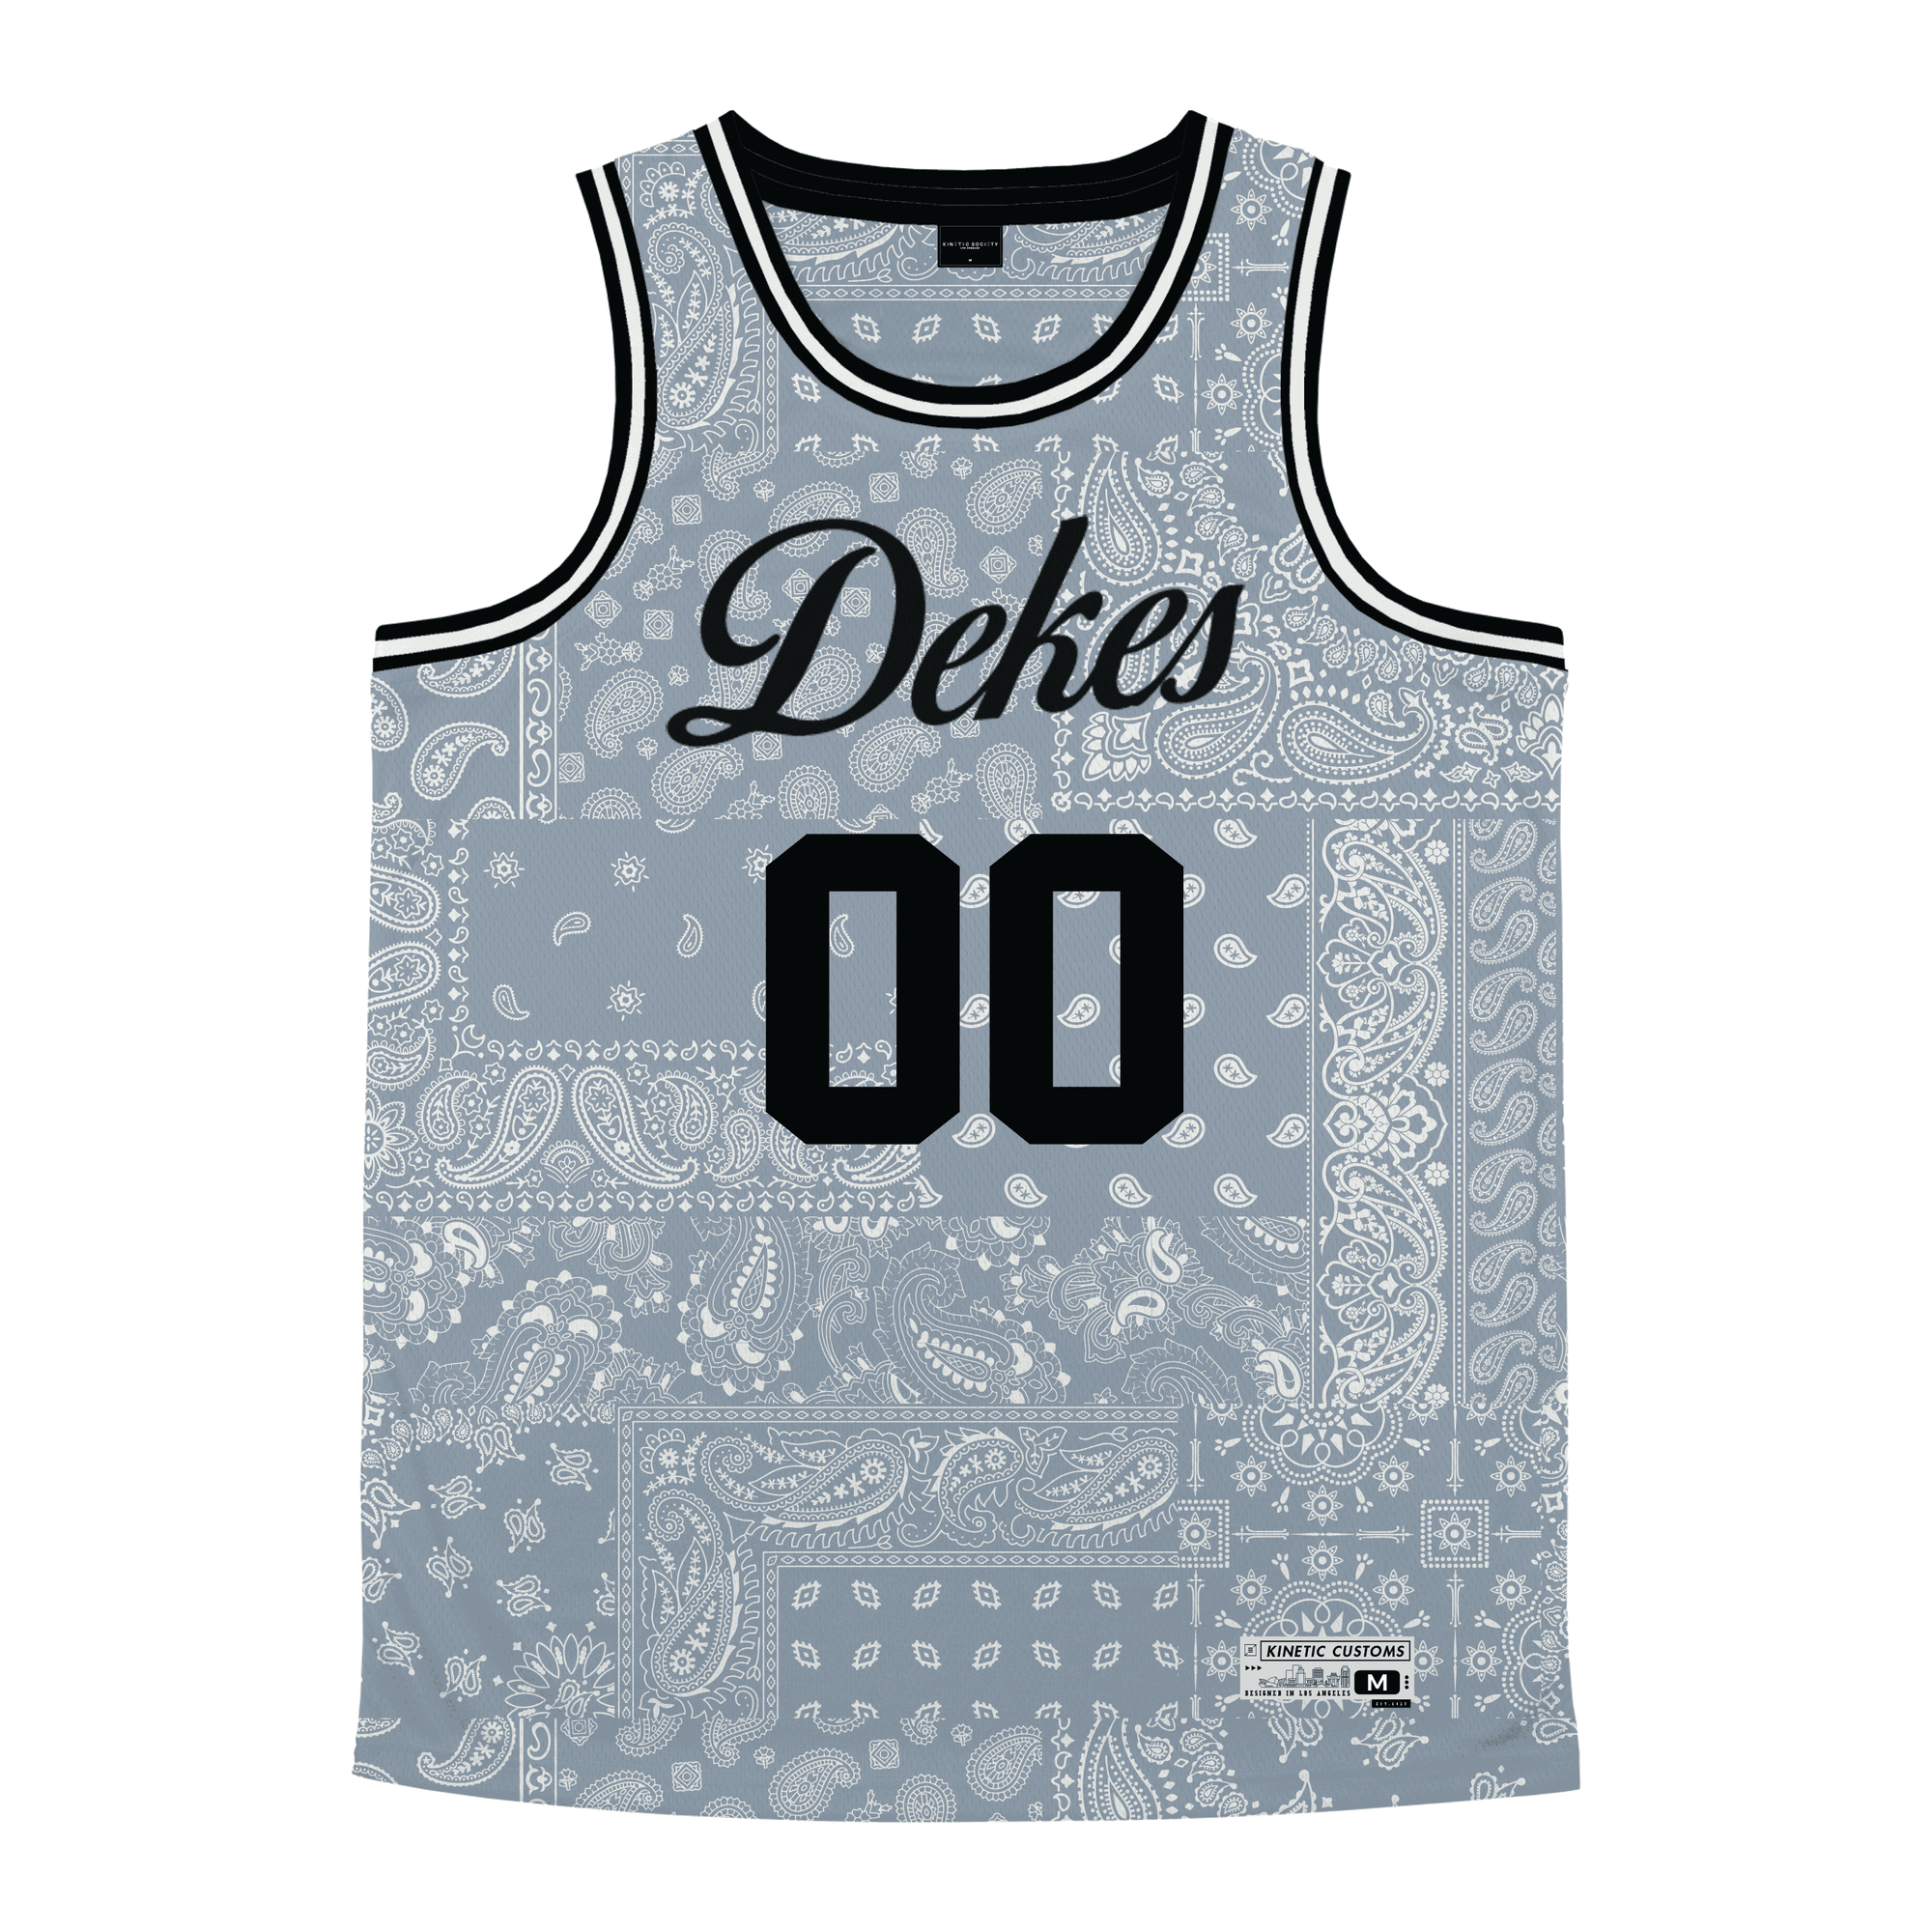 Delta Kappa Epsilon - Slate Bandana - Basketball Jersey